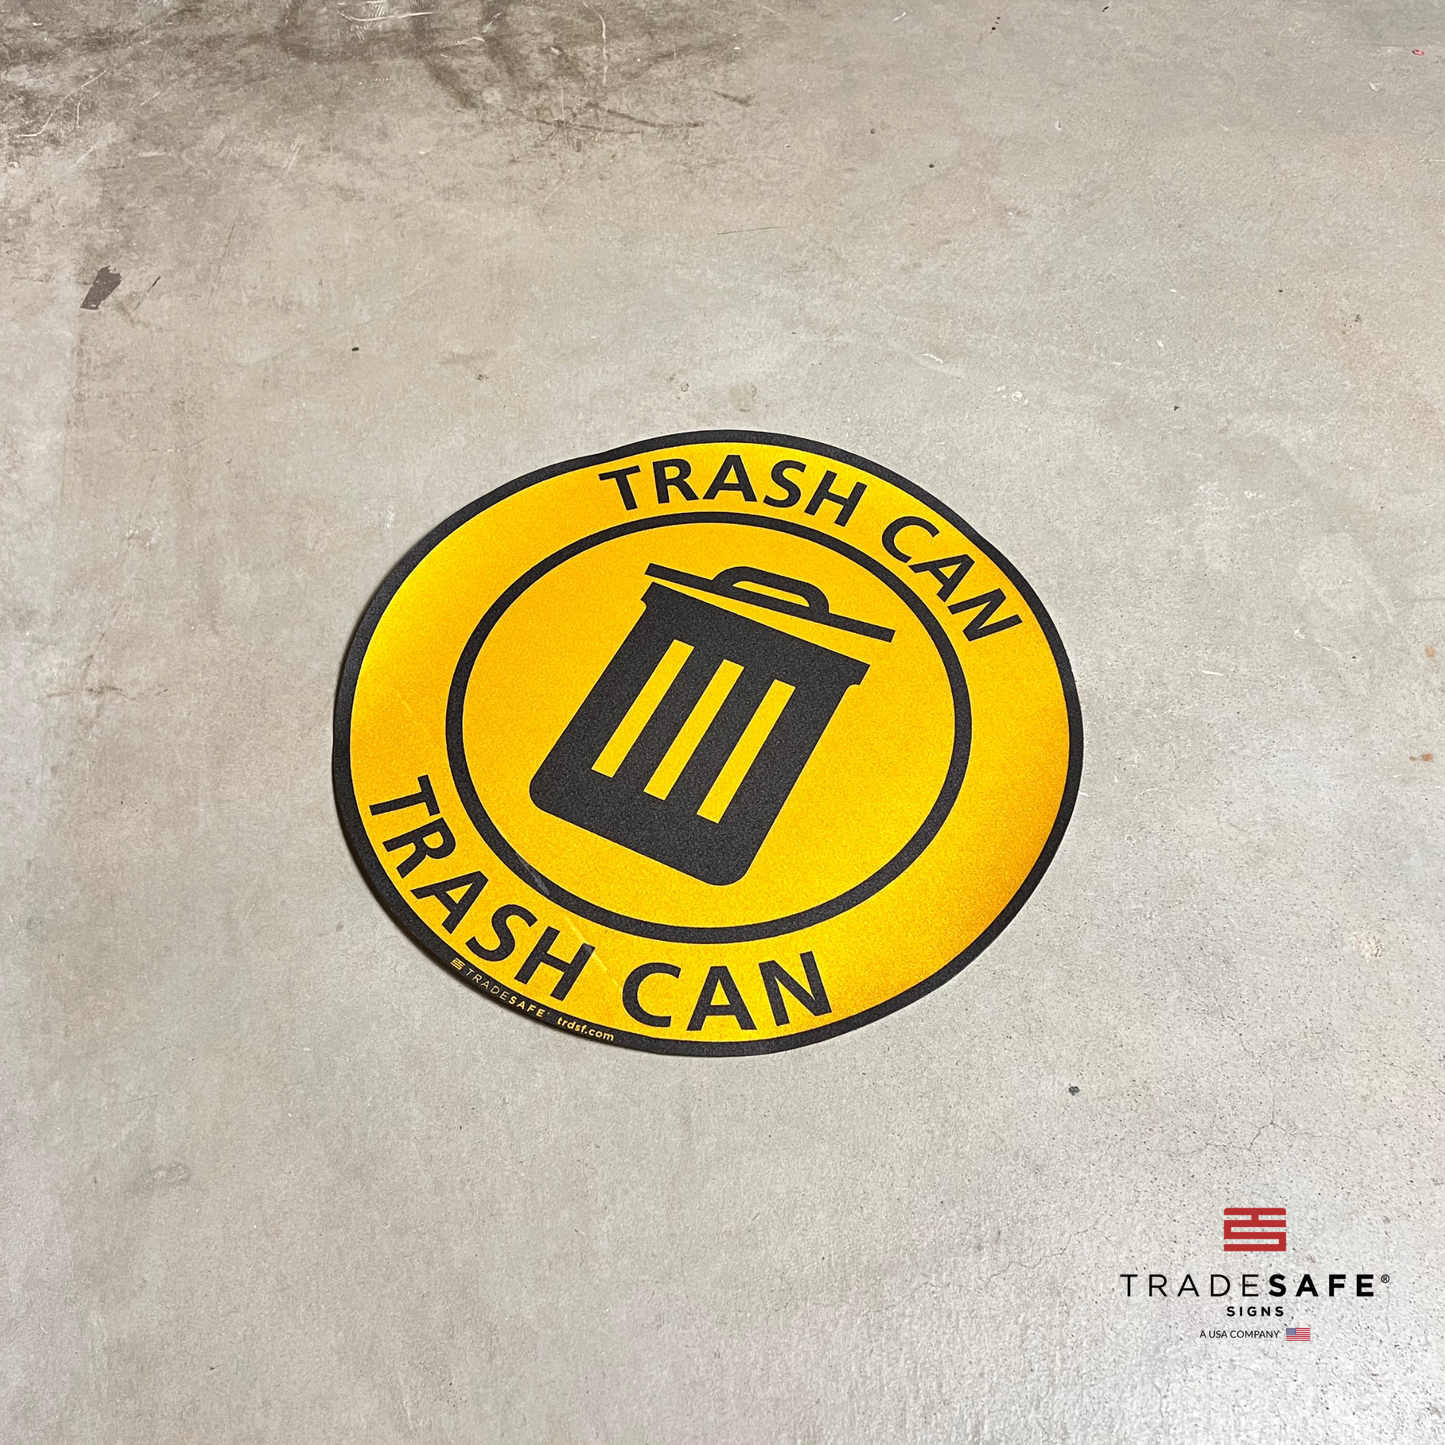 trash can sign vinyl sticker on floor